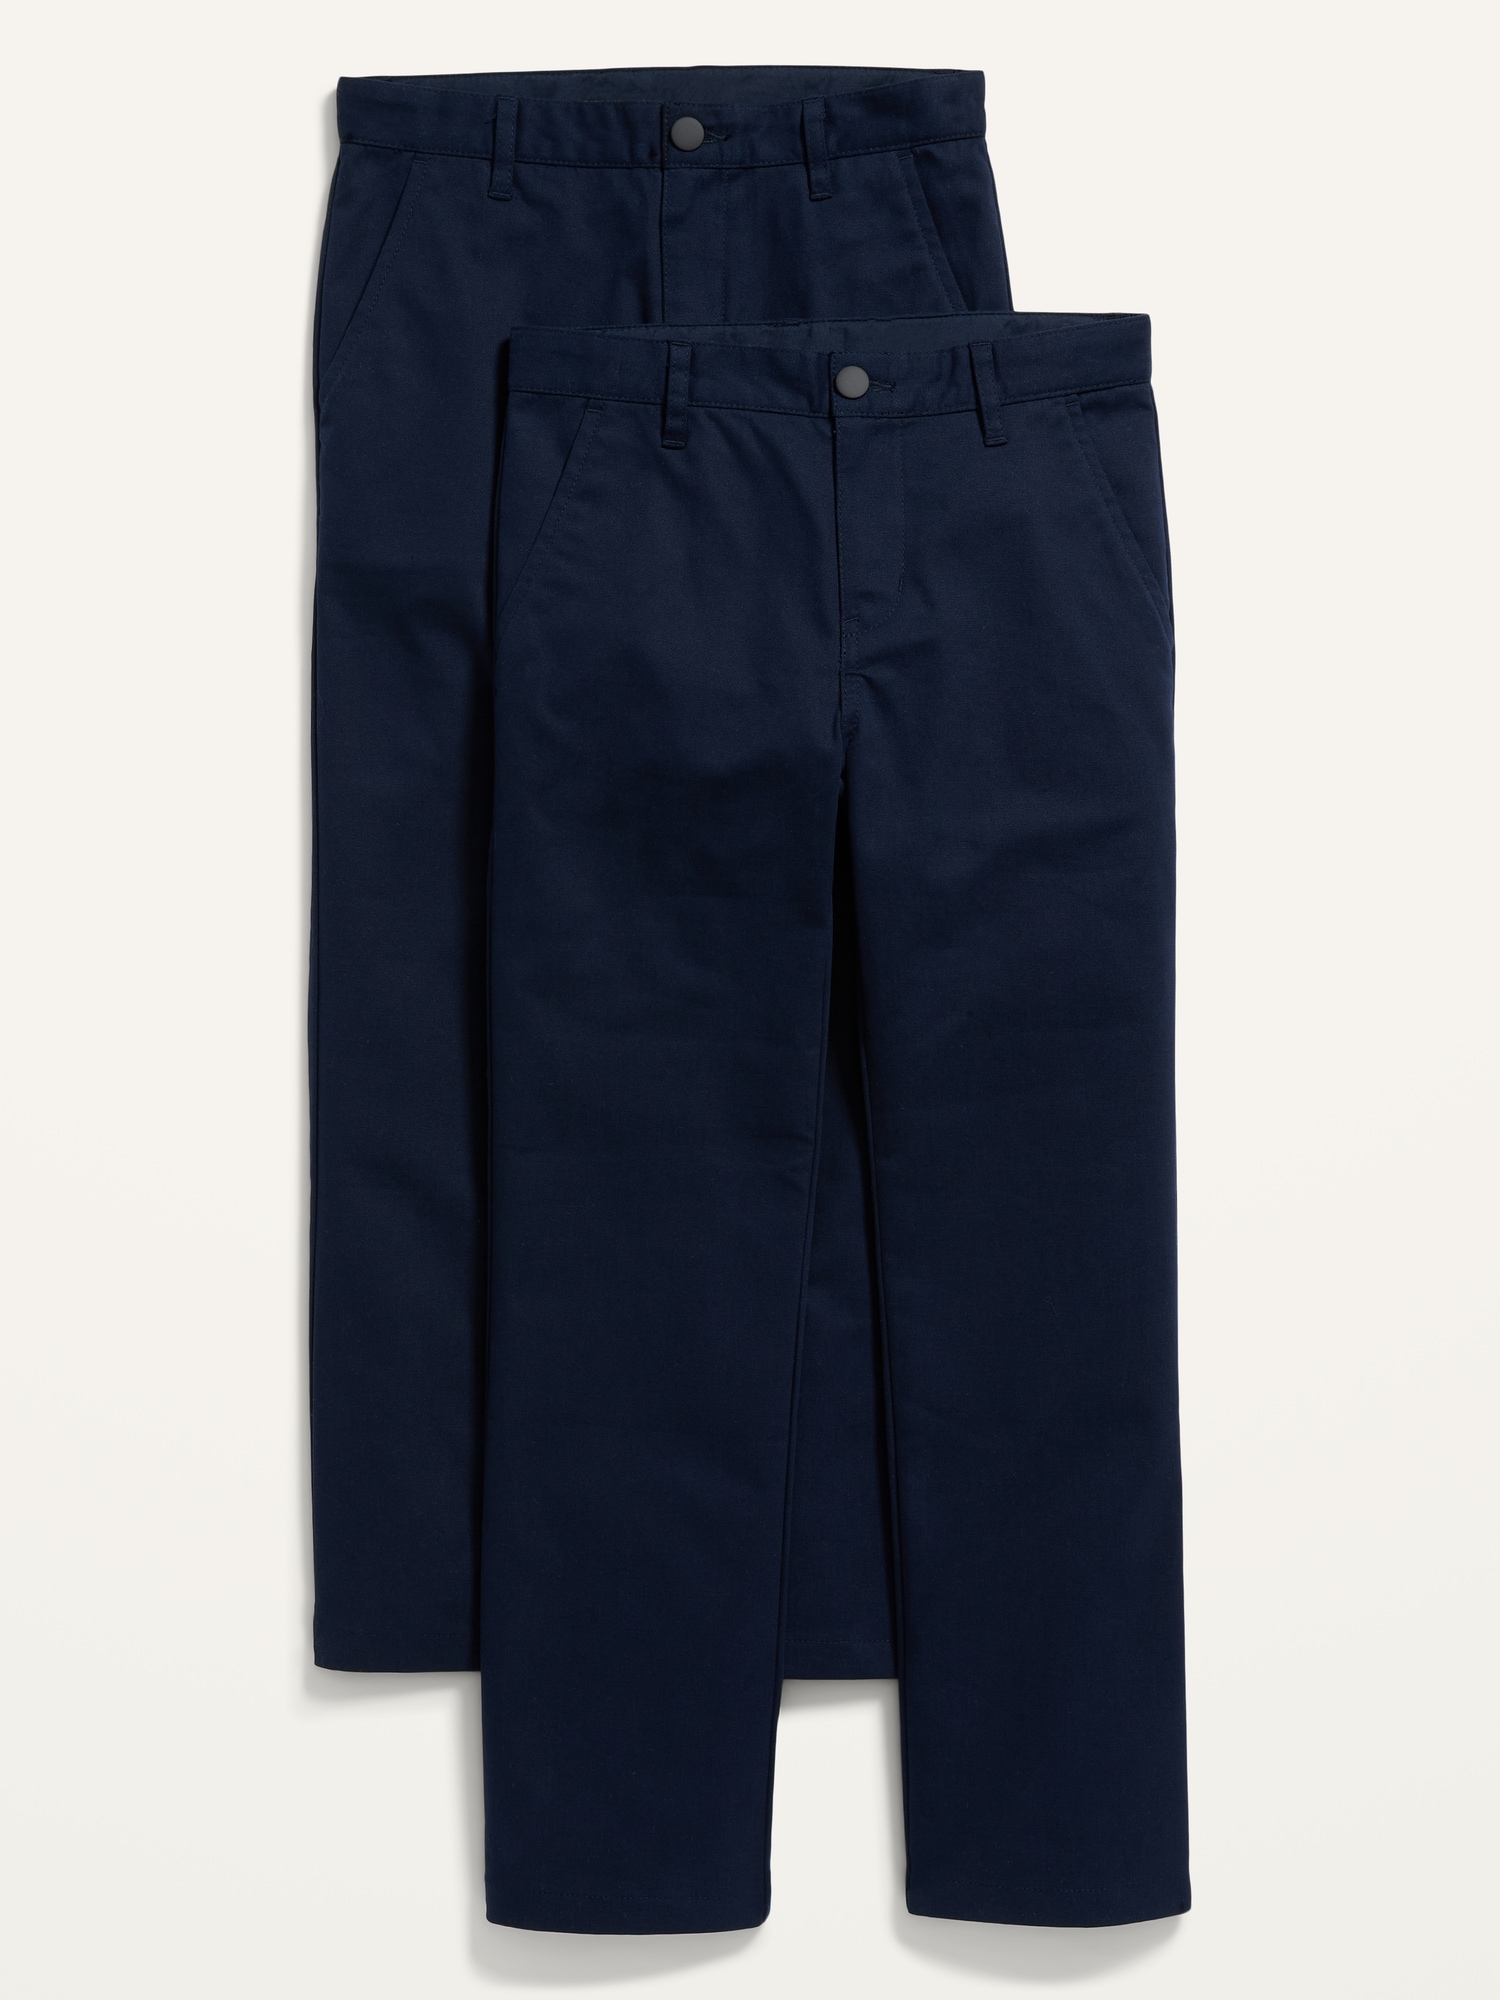 Old Navy Uniform Straight Leg Pants for Boys 2-Pack blue. 1